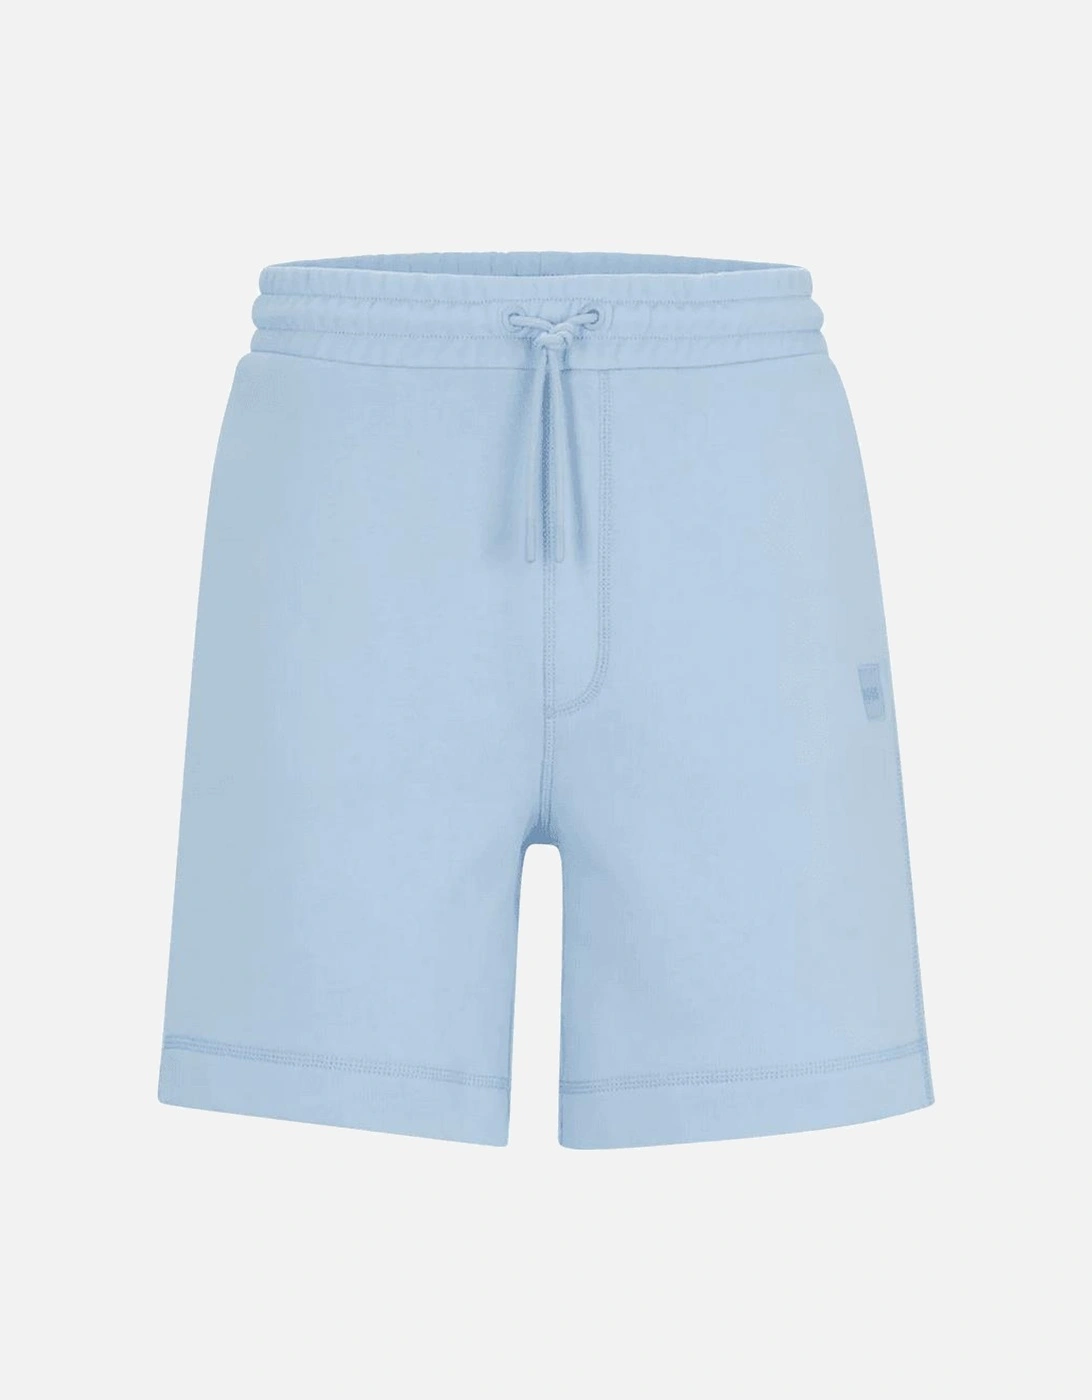 Sewalk Cotton Regular Fit Light Blue Shorts, 4 of 3